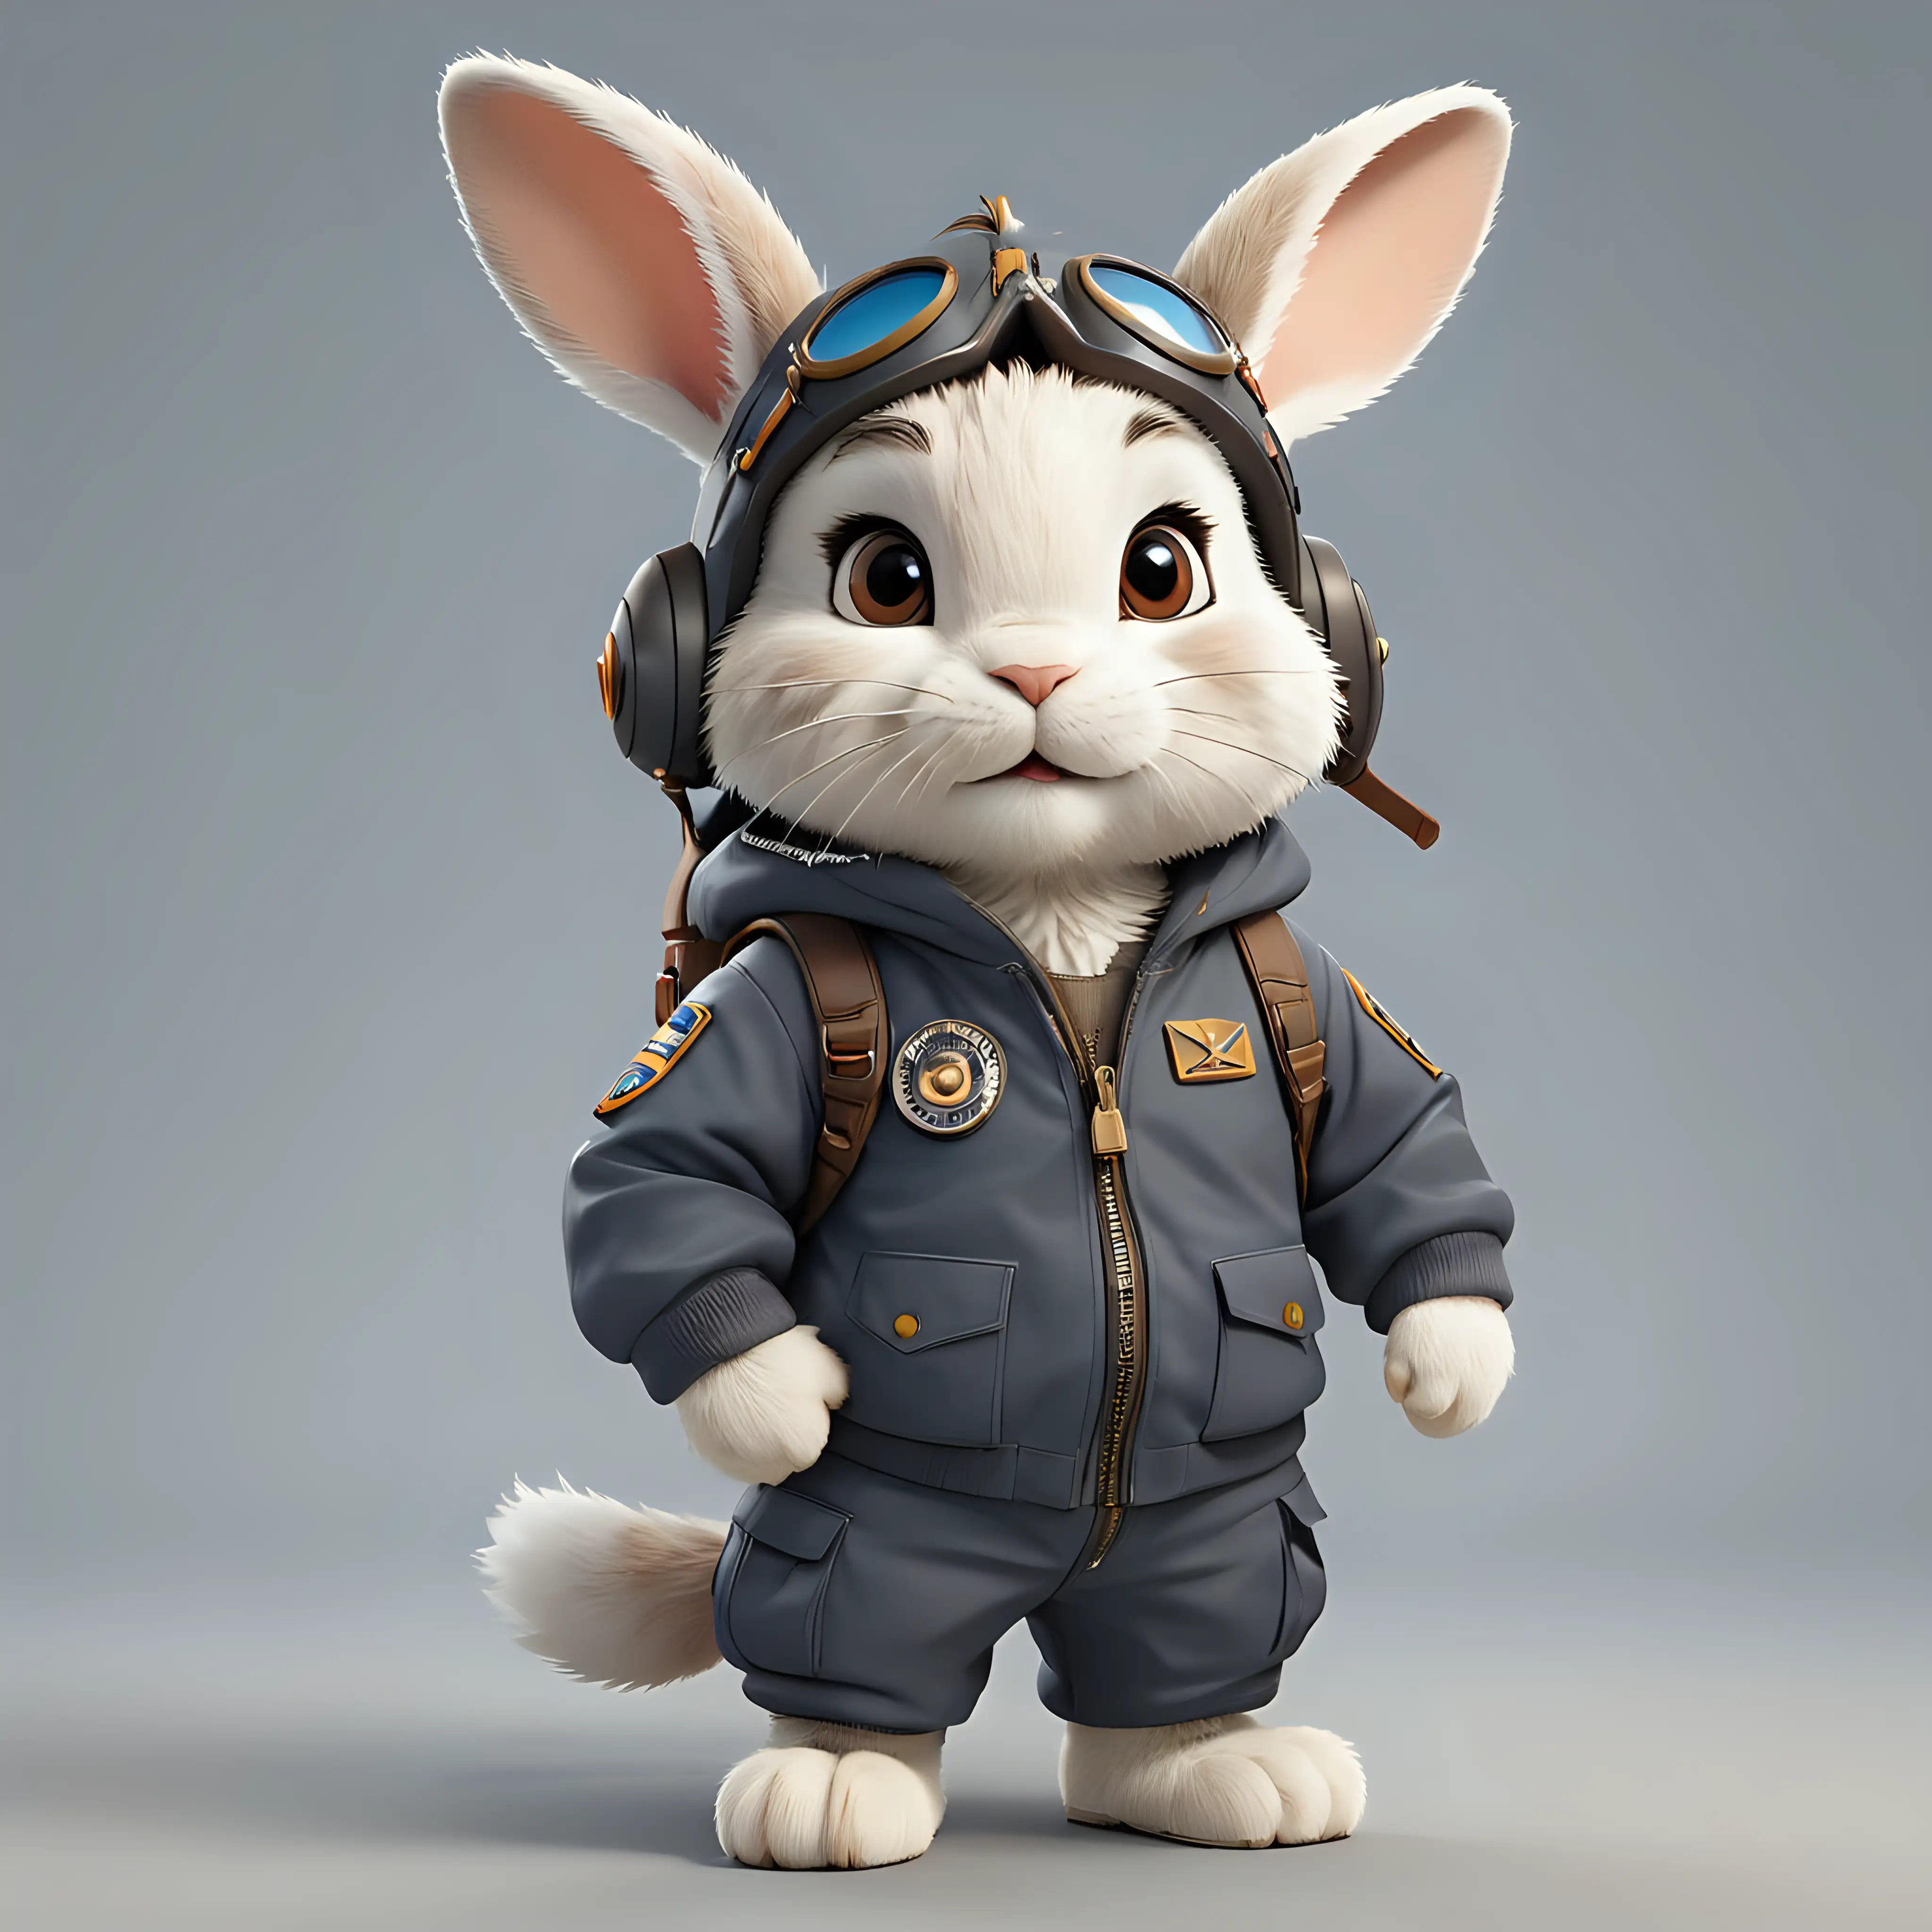 Adorable Cartoon Rabbit Pilot in Full Body Costume